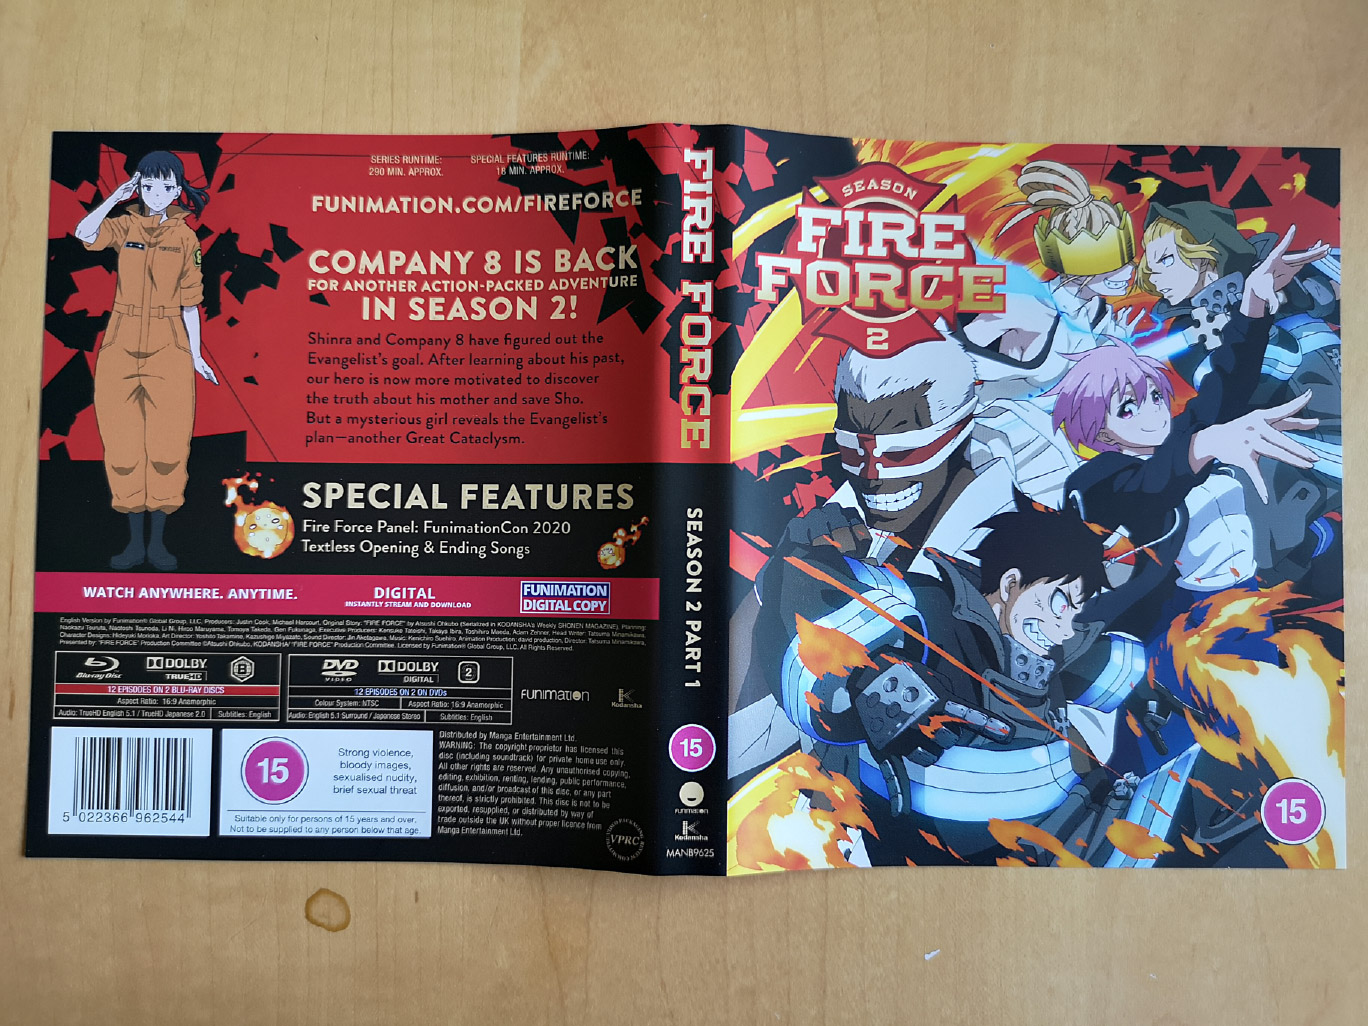 Fire Force: Season 2 - Part 2 - Limited Edition Blu-ray + DVD + Digital